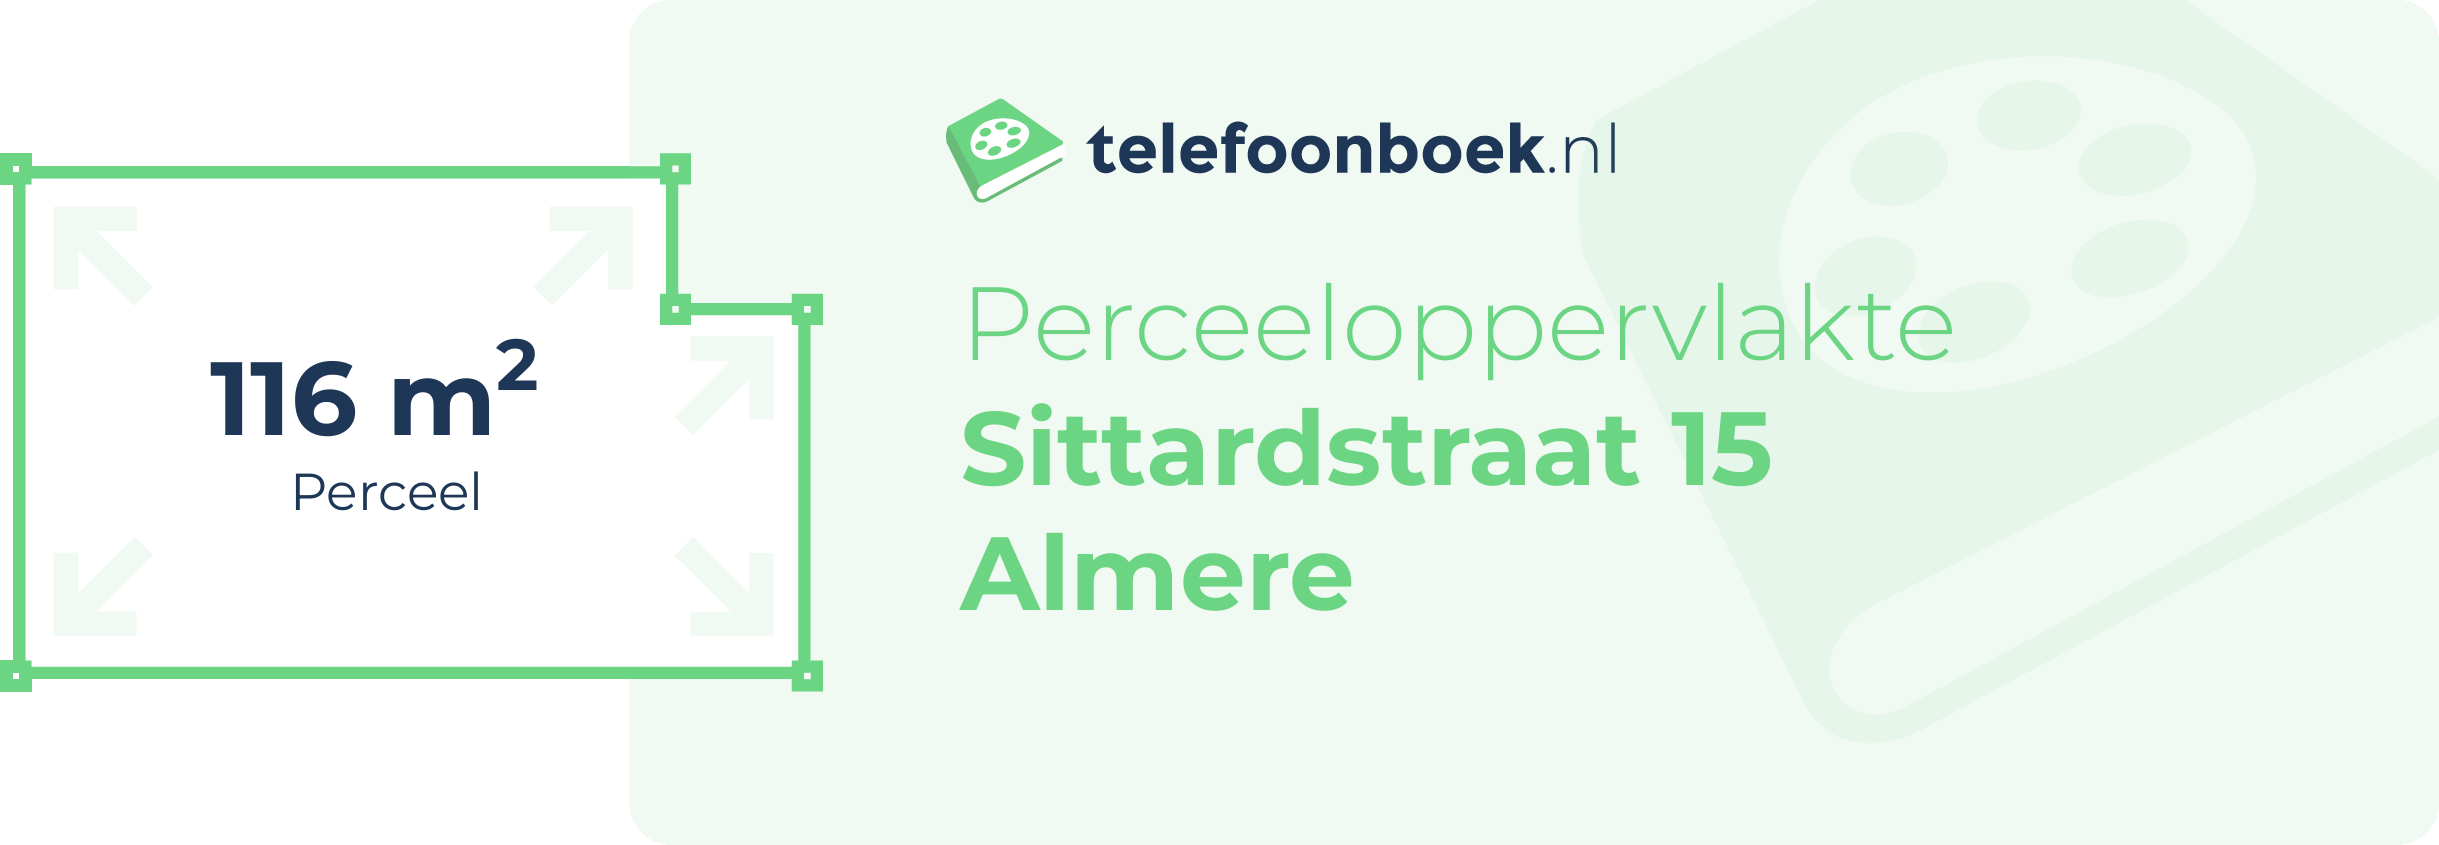 Perceeloppervlakte Sittardstraat 15 Almere